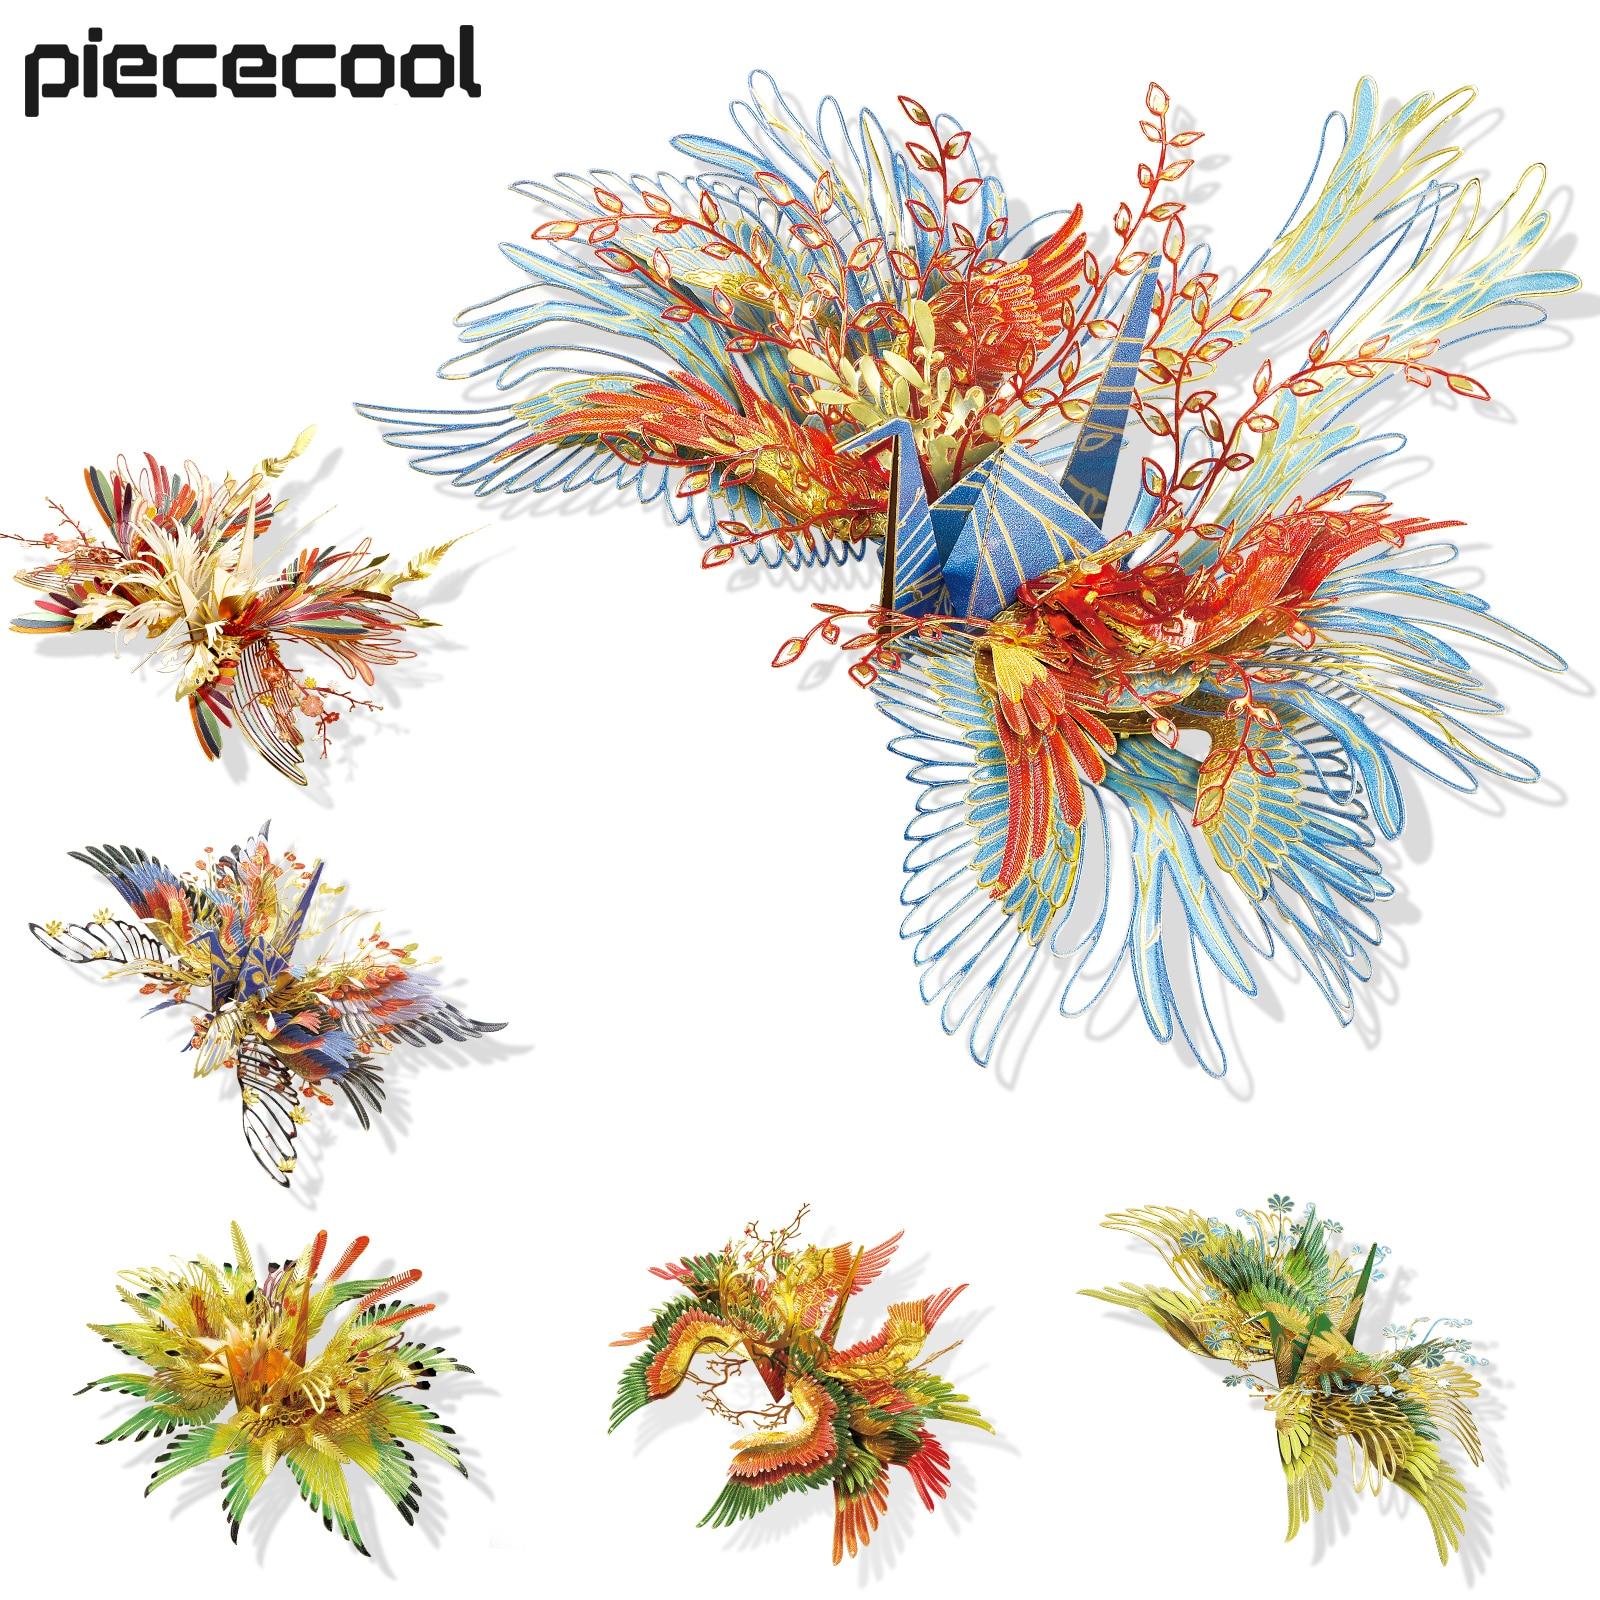 Piececool-6-Pcs-Set-Puzzle-3D-Thousand-Wish-Crane-Series-Metal-Model-Kits-DIY-Jigsaw-Assembly.jpg